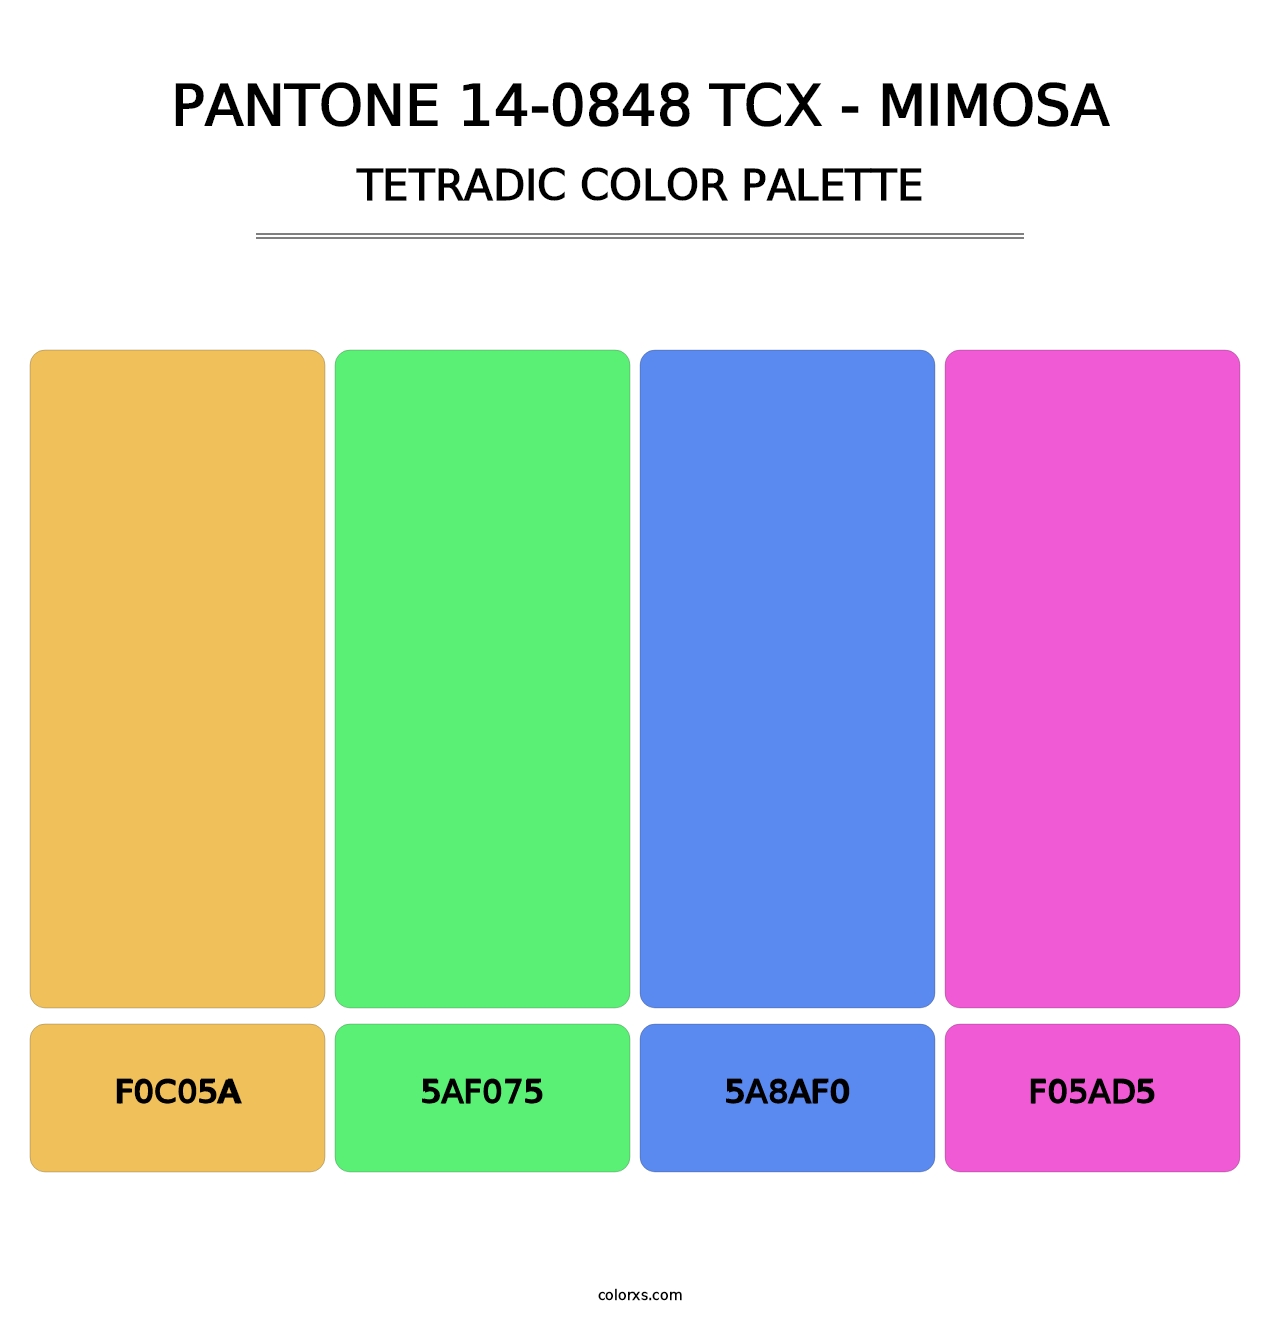 PANTONE 14-0848 TCX - Mimosa - Tetradic Color Palette